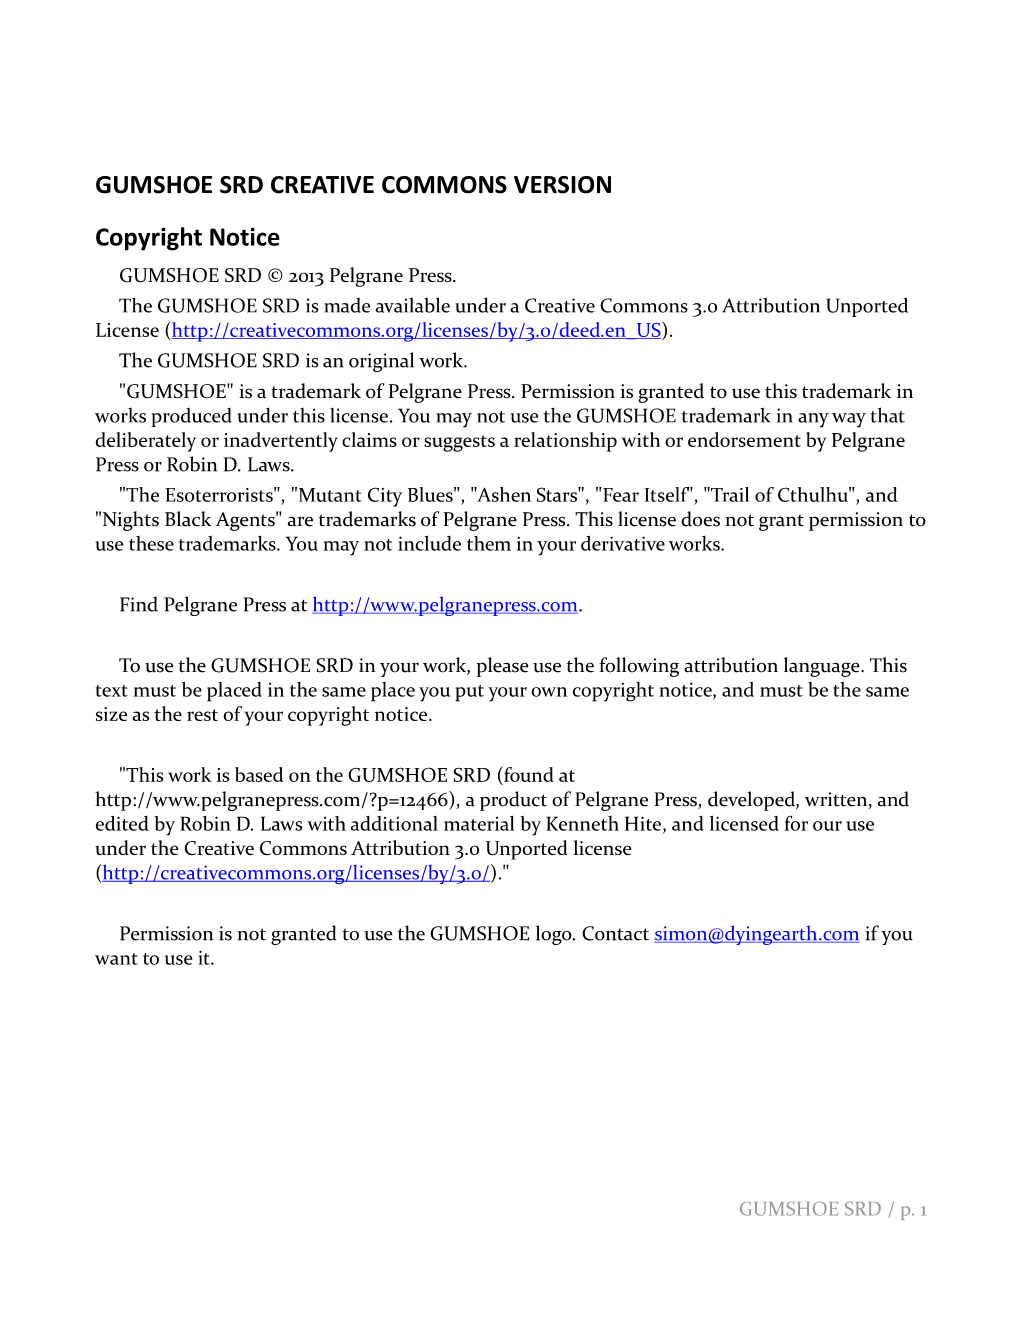 GUMSHOE SRD CREATIVE COMMONS VERSION Copyright Notice GUMSHOE SRD © 2013 Pelgrane Press